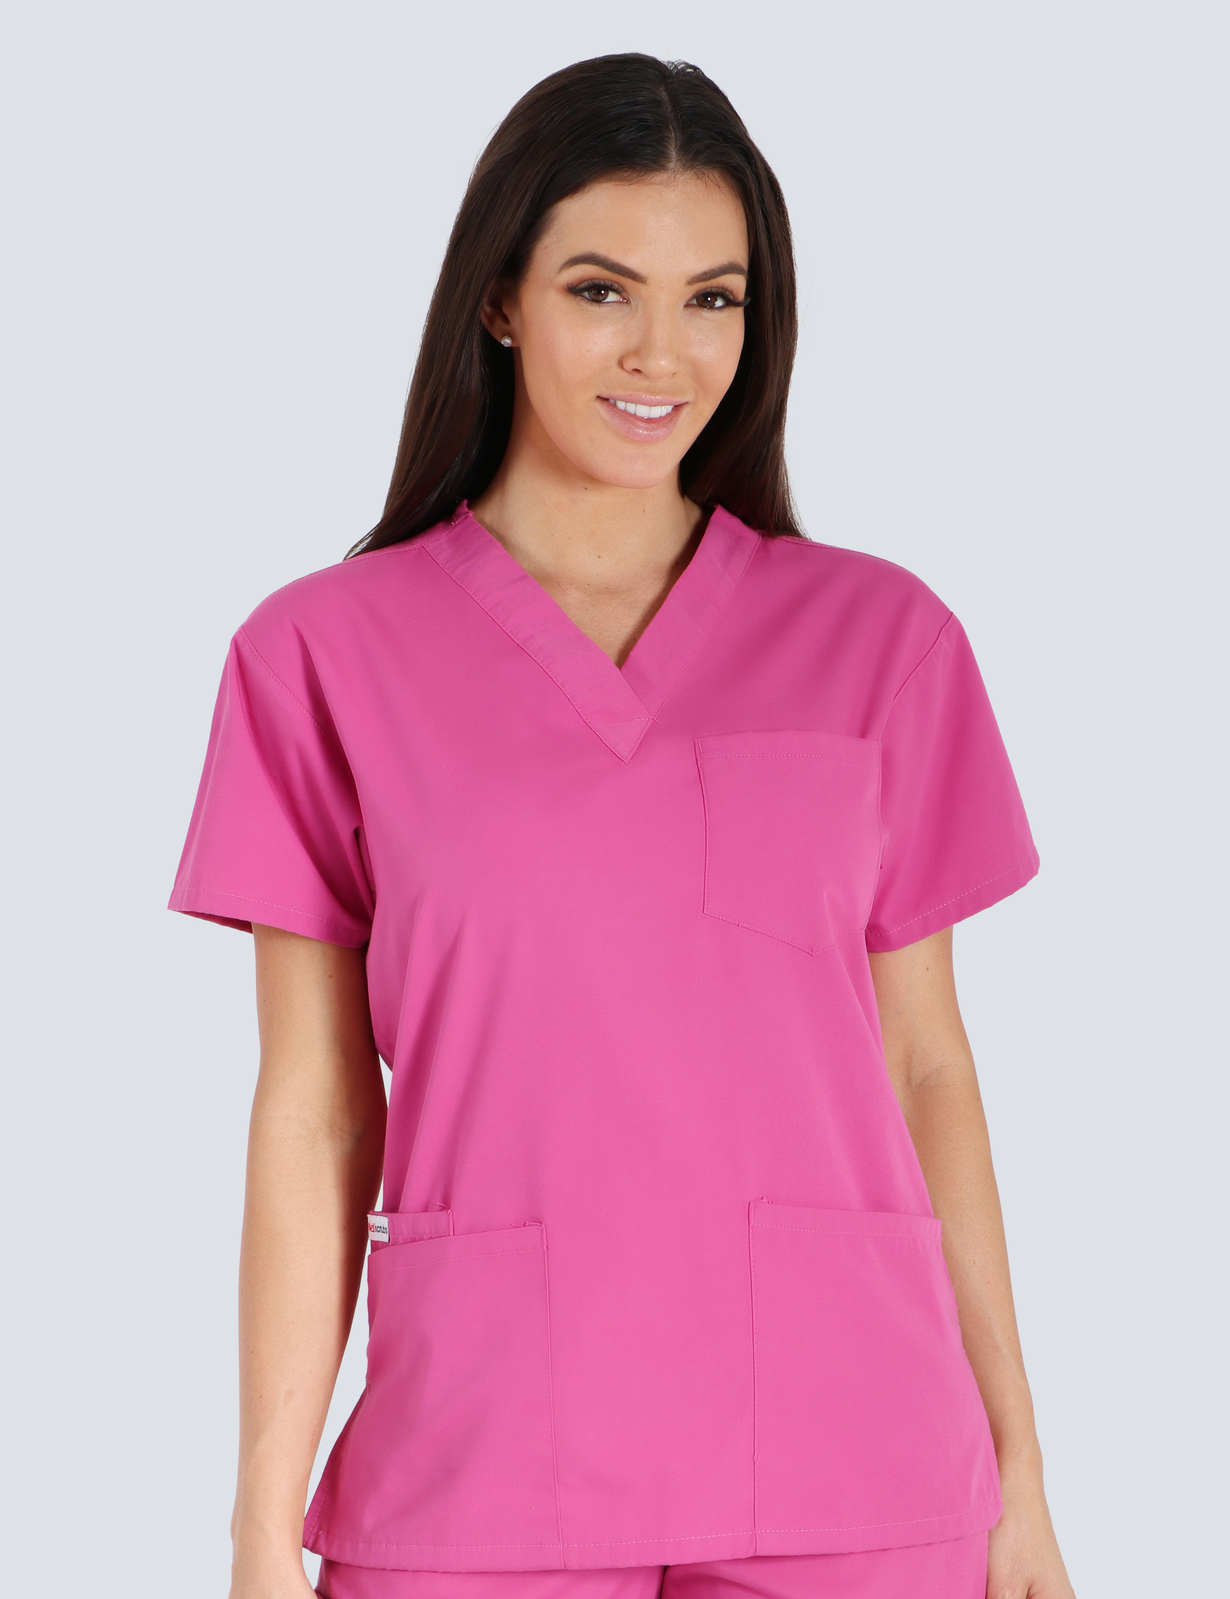 Queensland Children's Hospital Emergency Department Assistant in Nursing  Uniform Top Bundle  (4 Pocket Top in Pink incl Logos)